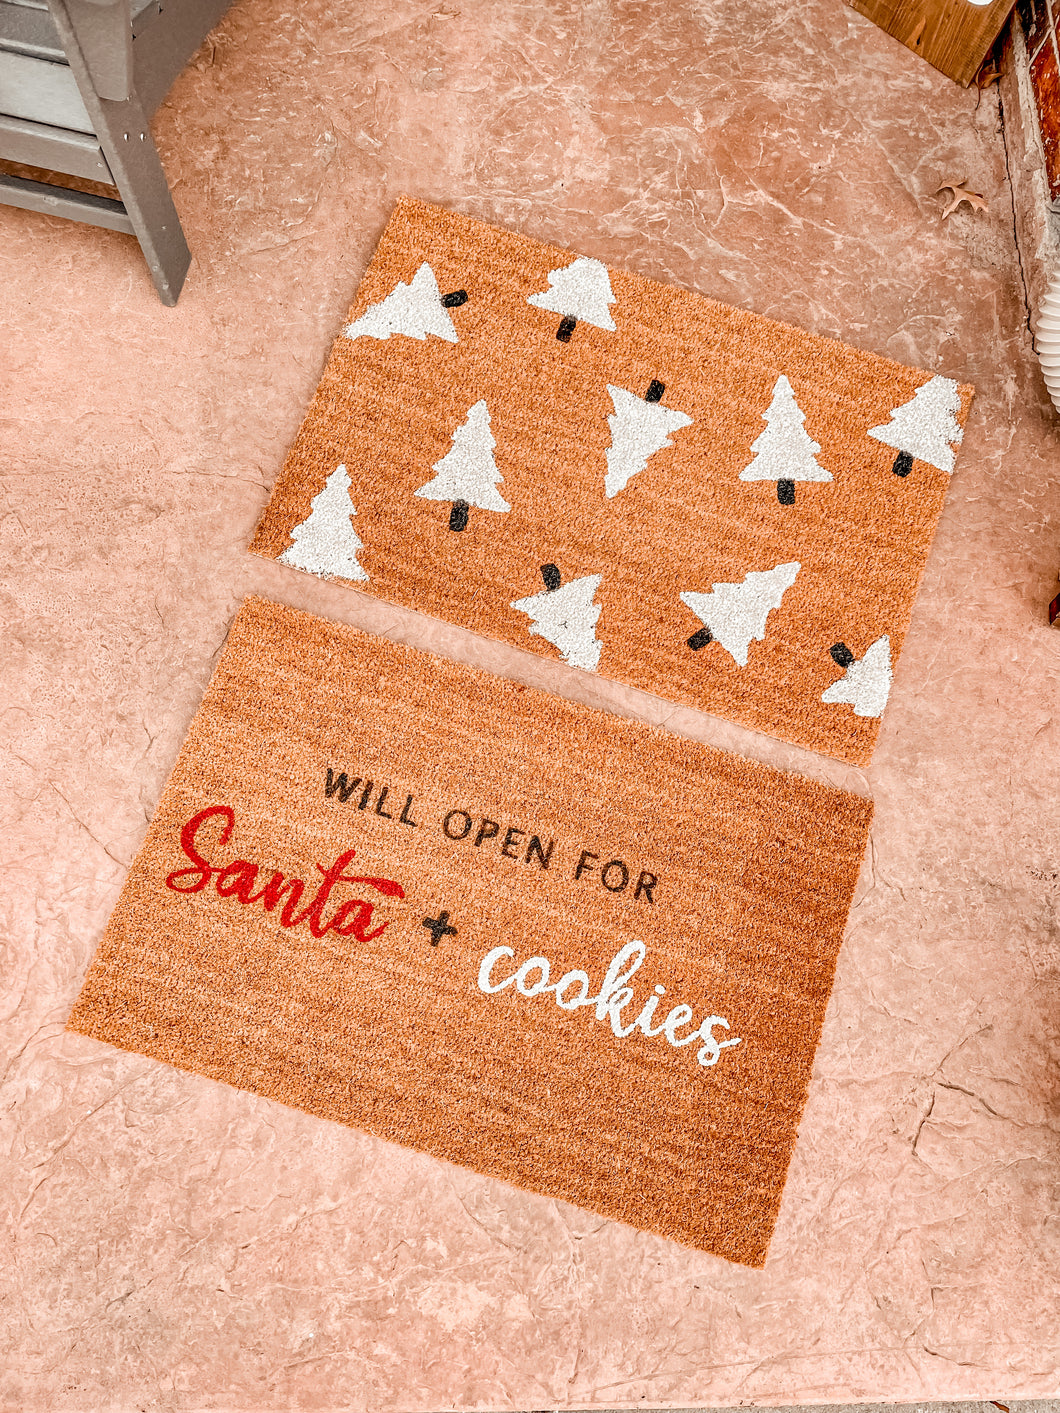 Will open for Santa & cookies Doormat DIY at home kit